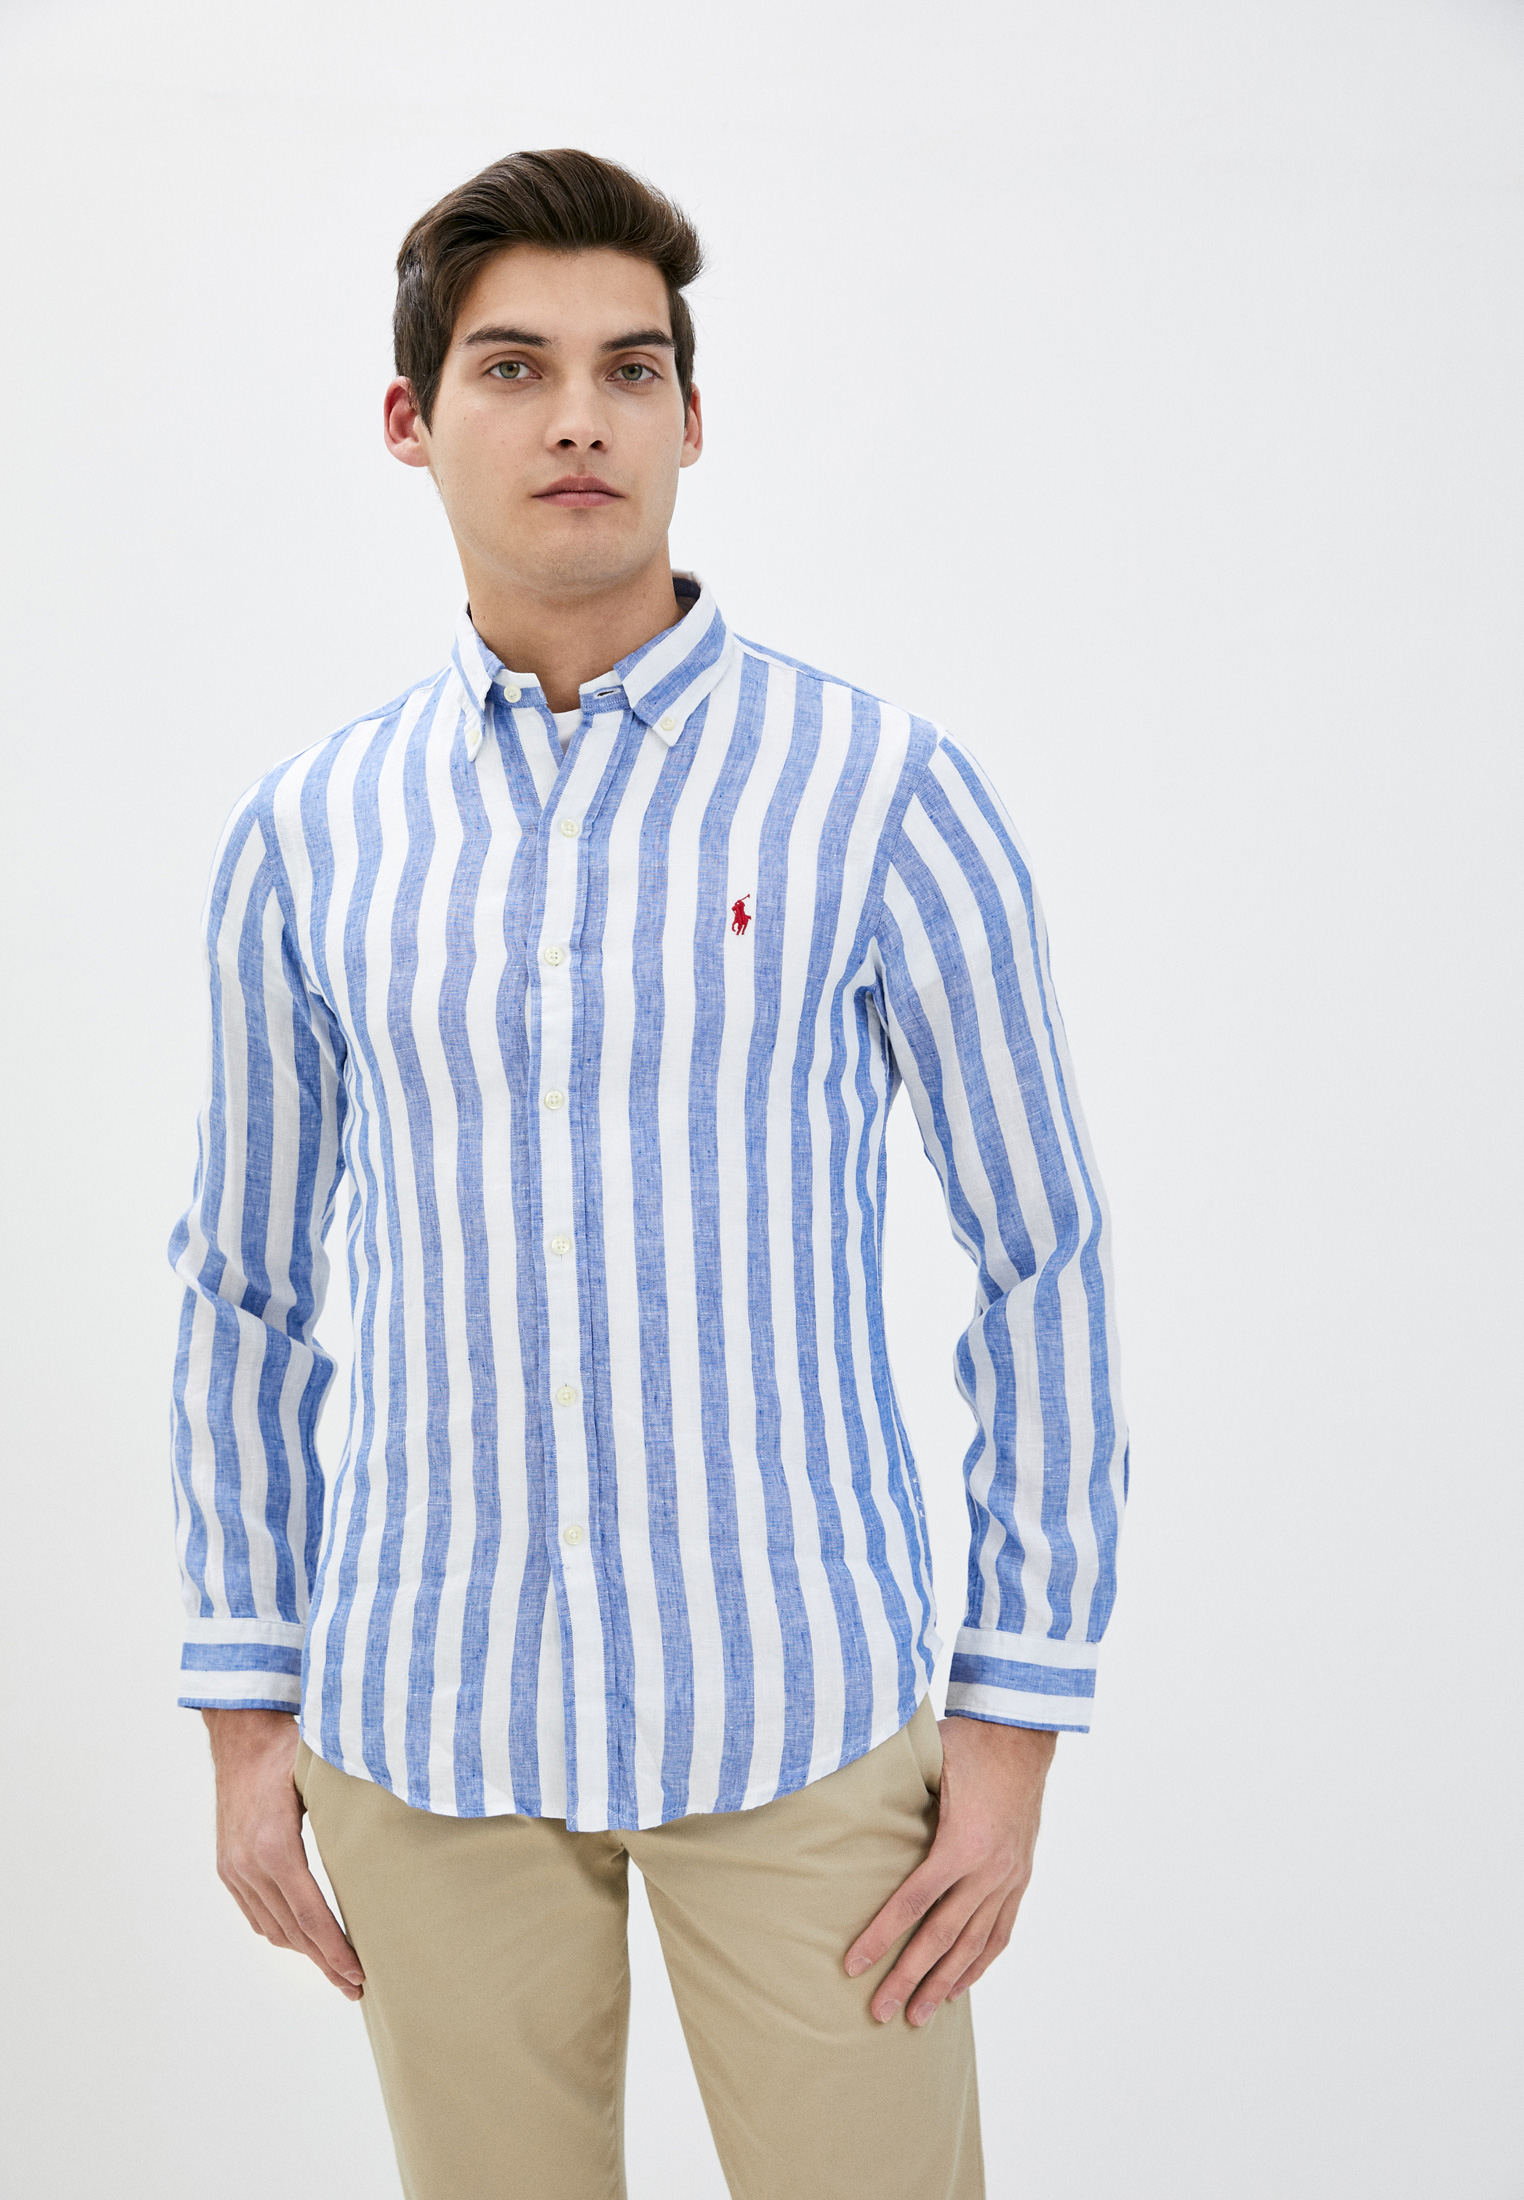 Рубашка Polo Ralph Lauren, цвет: синий, PO006EMHTZS5 — купить в  интернет-магазине Lamoda